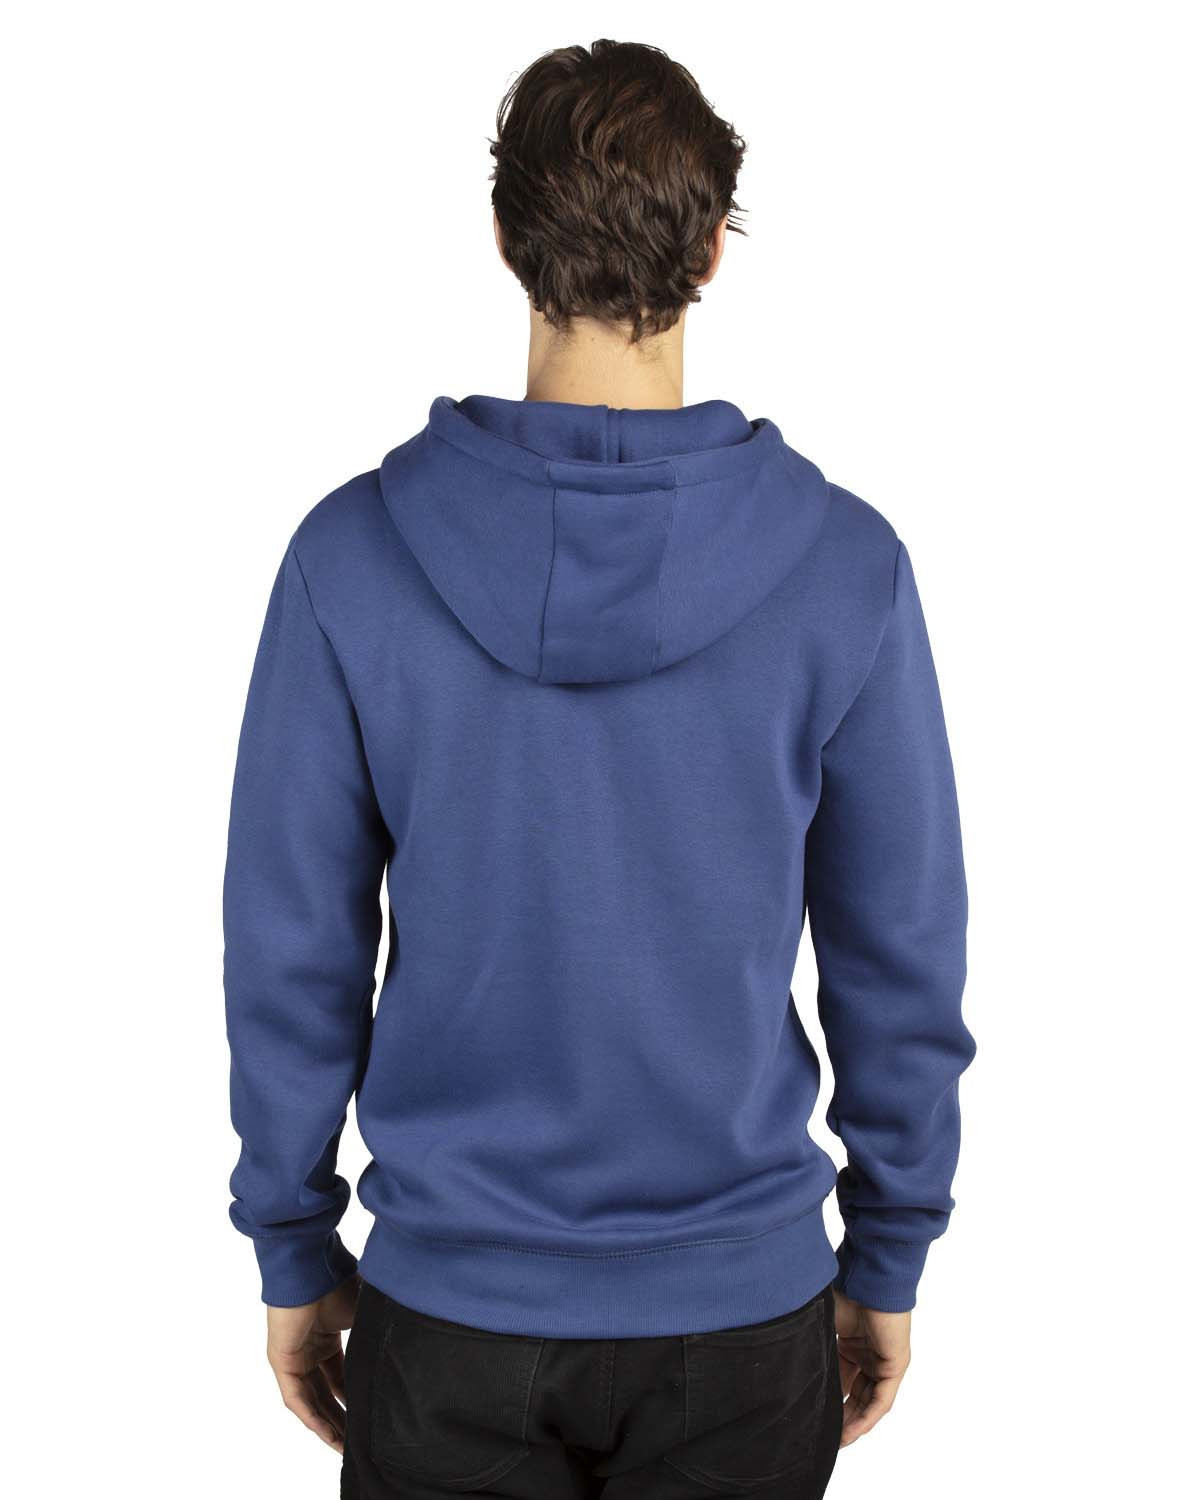 ATC Cotton Fleece Hooded Sweatshirt - Blue – Xtreme Threads